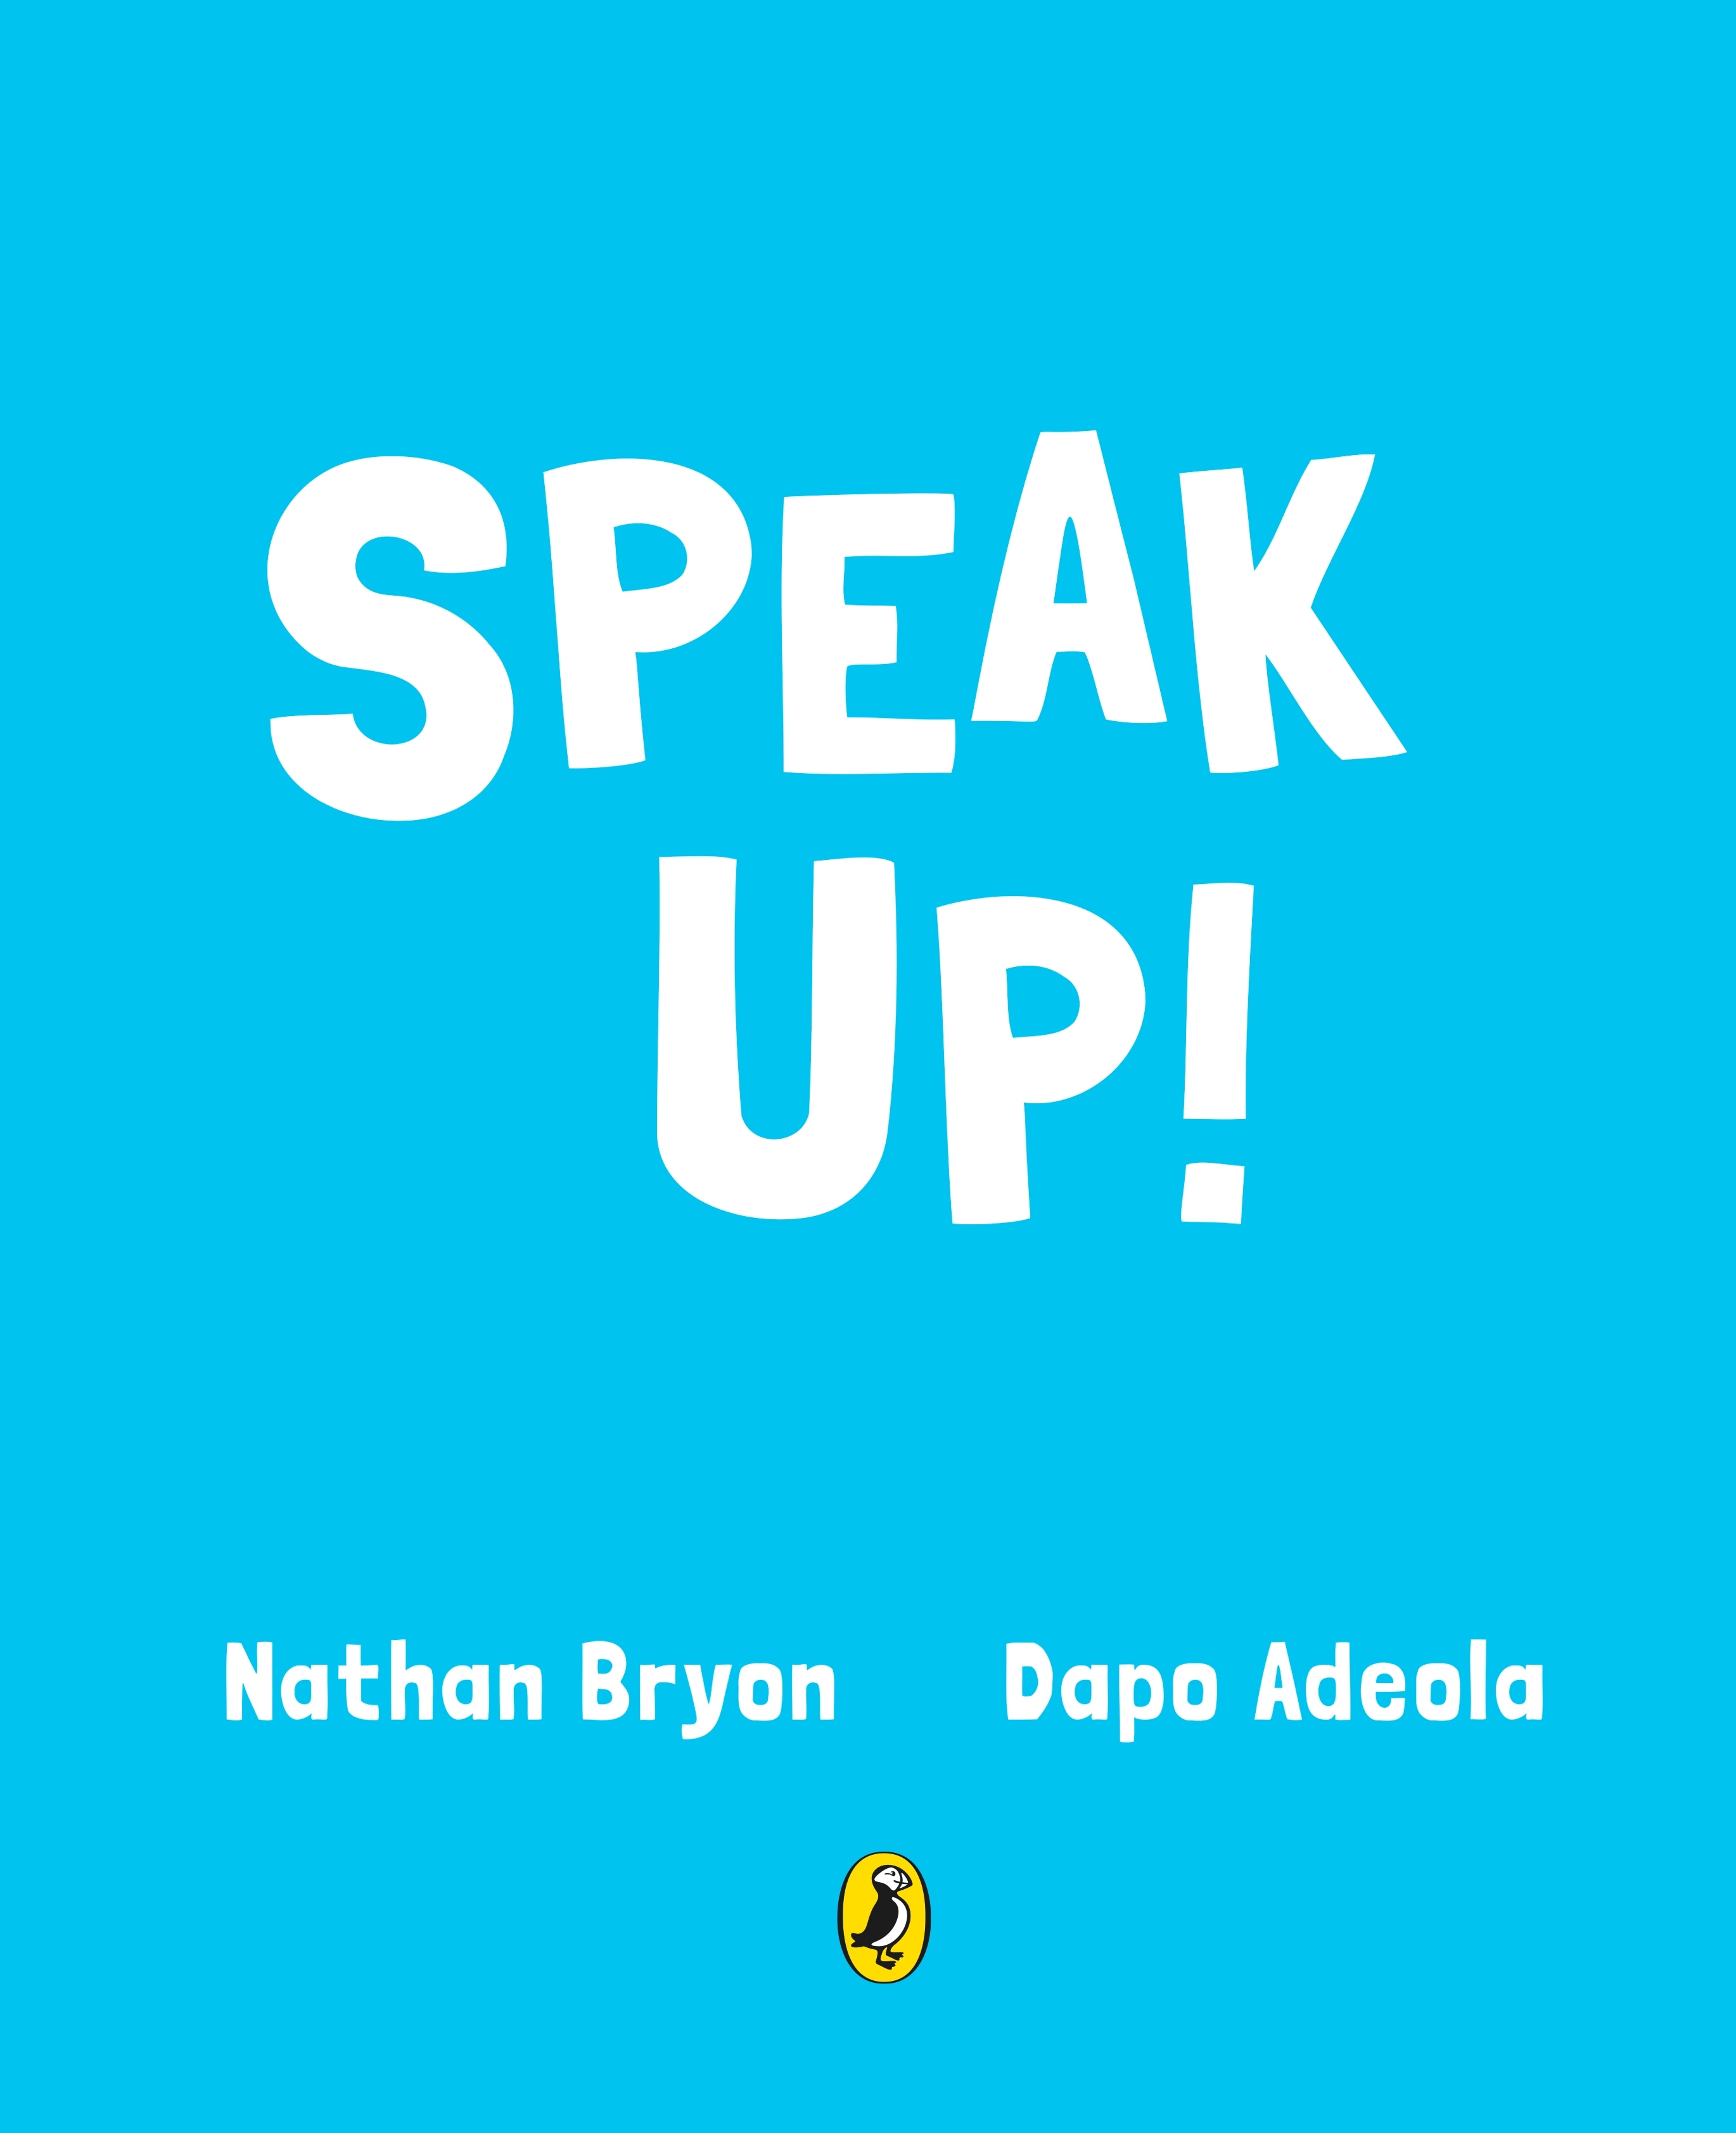 Book “Speak Up!” by Nathan Bryon — September 8, 2022